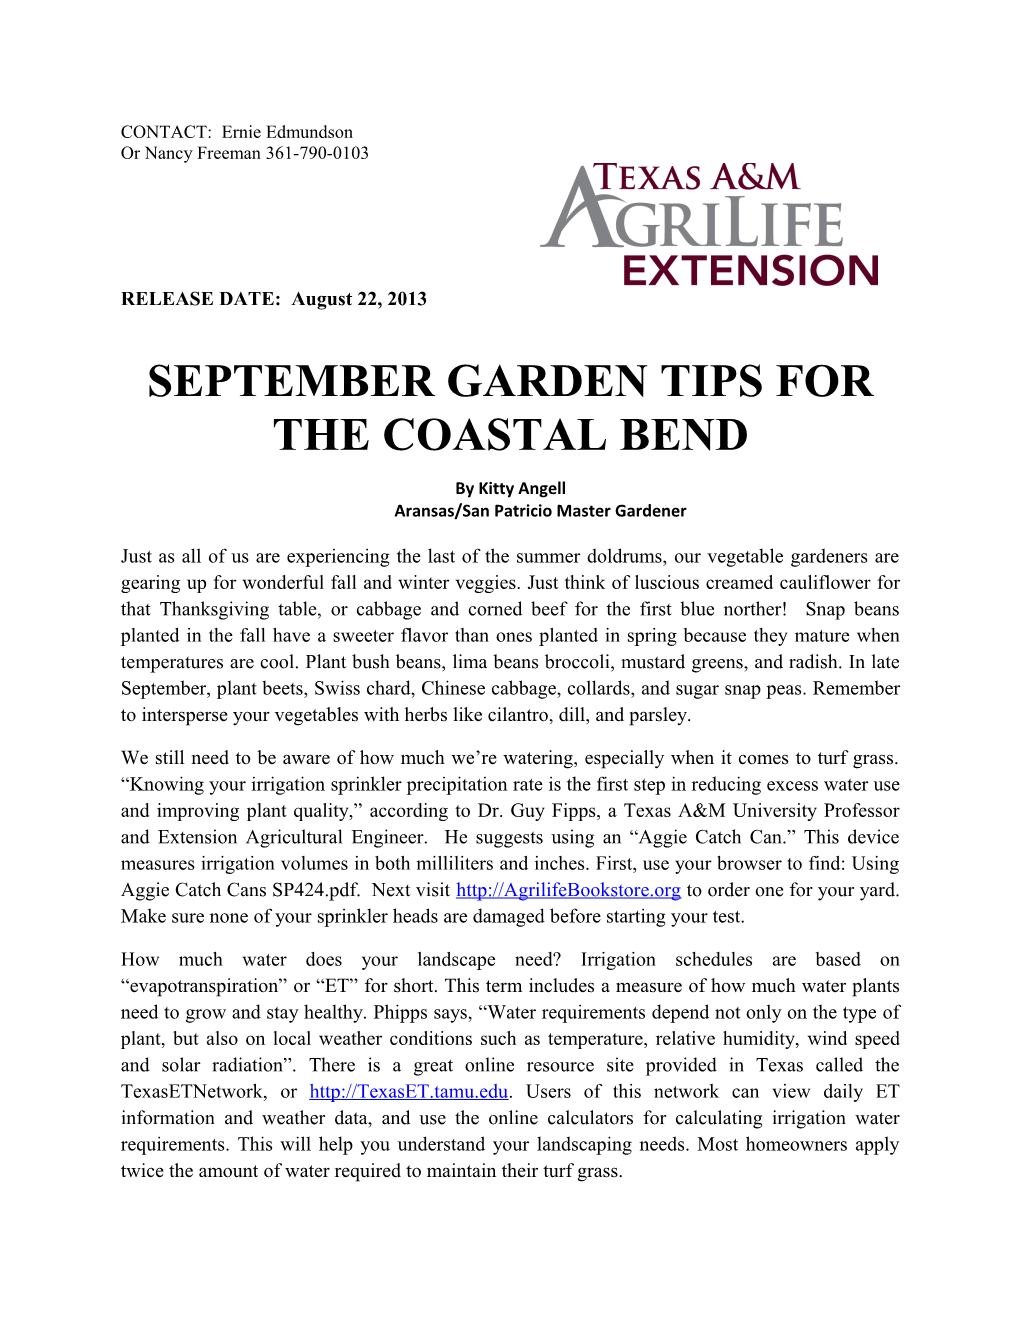 September Garden Tips for the Coastal Bend